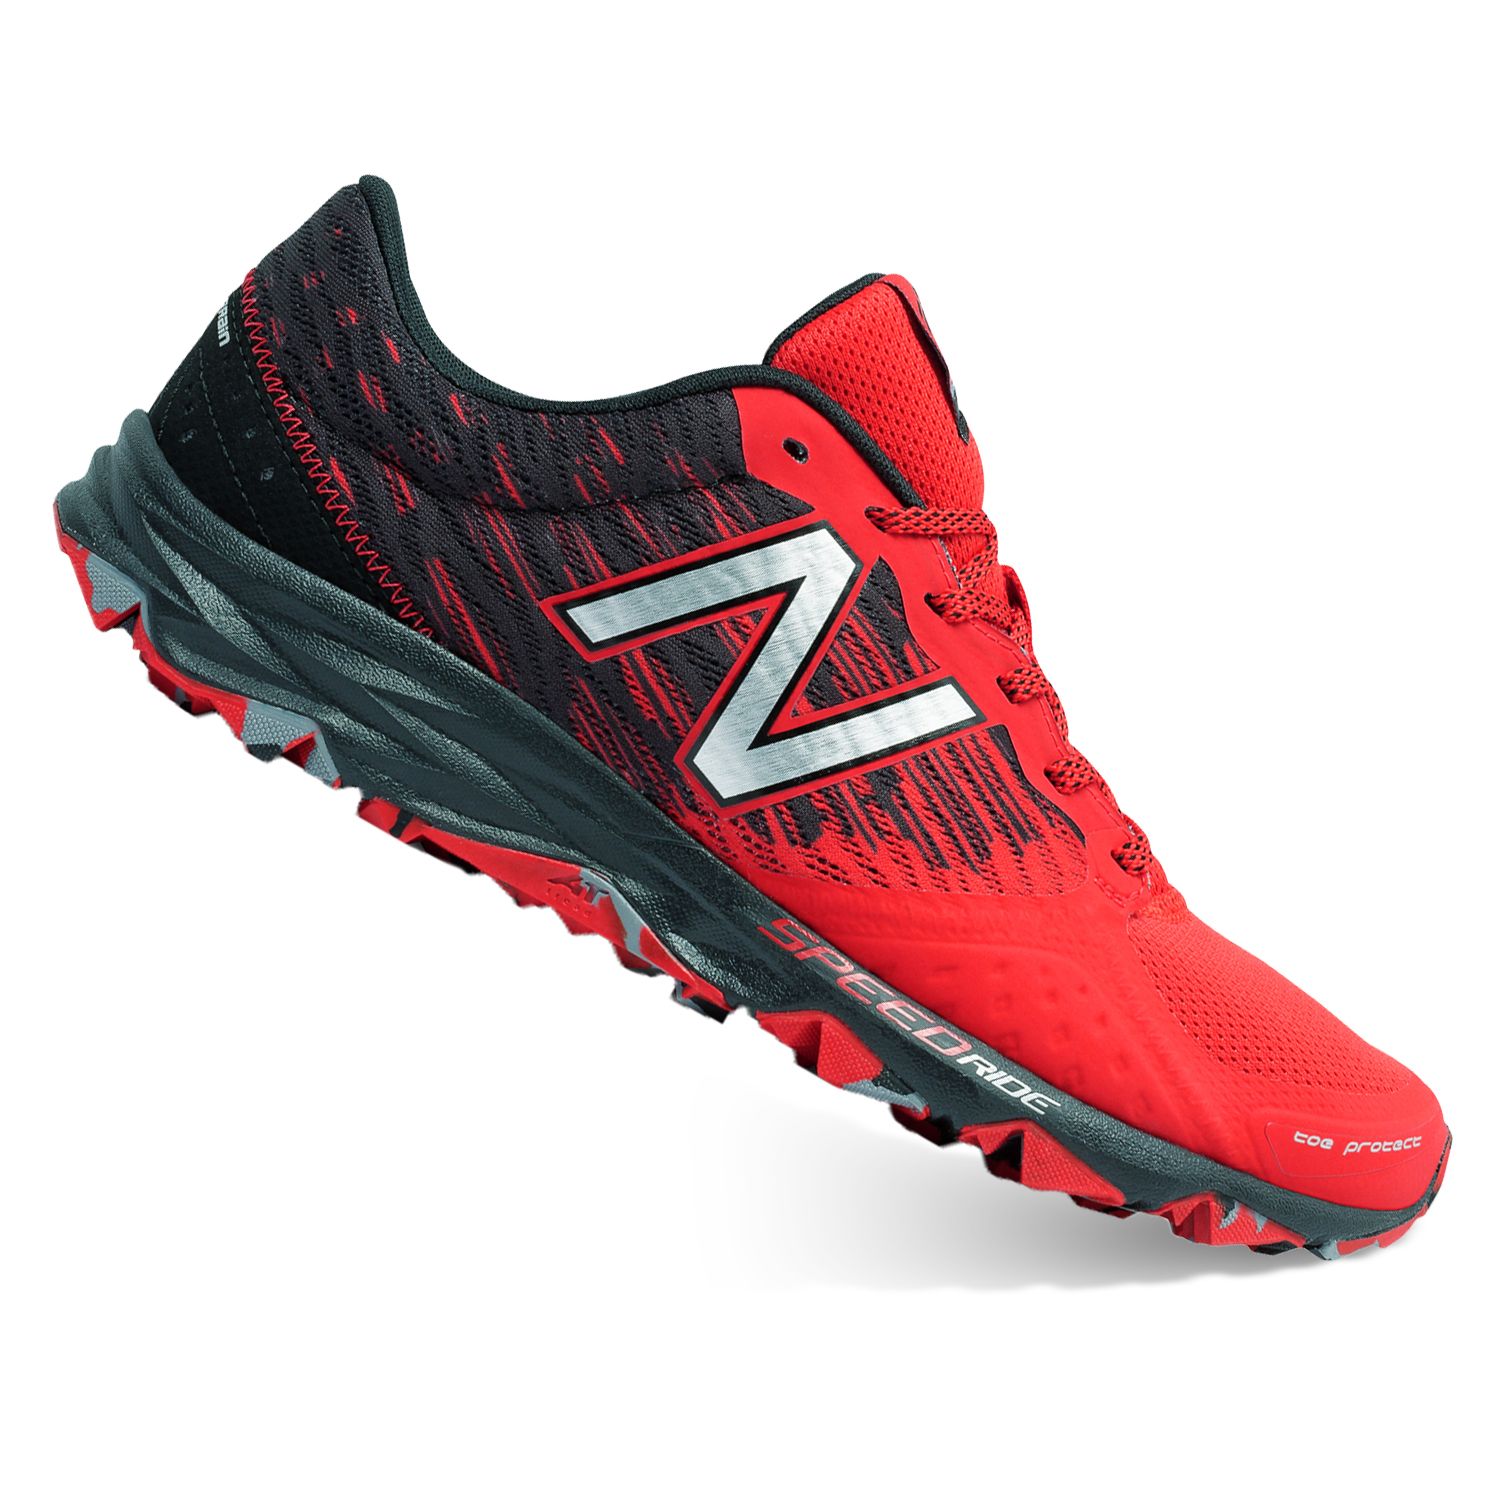 New Balance 690 v2 Men's Trail Running Shoes